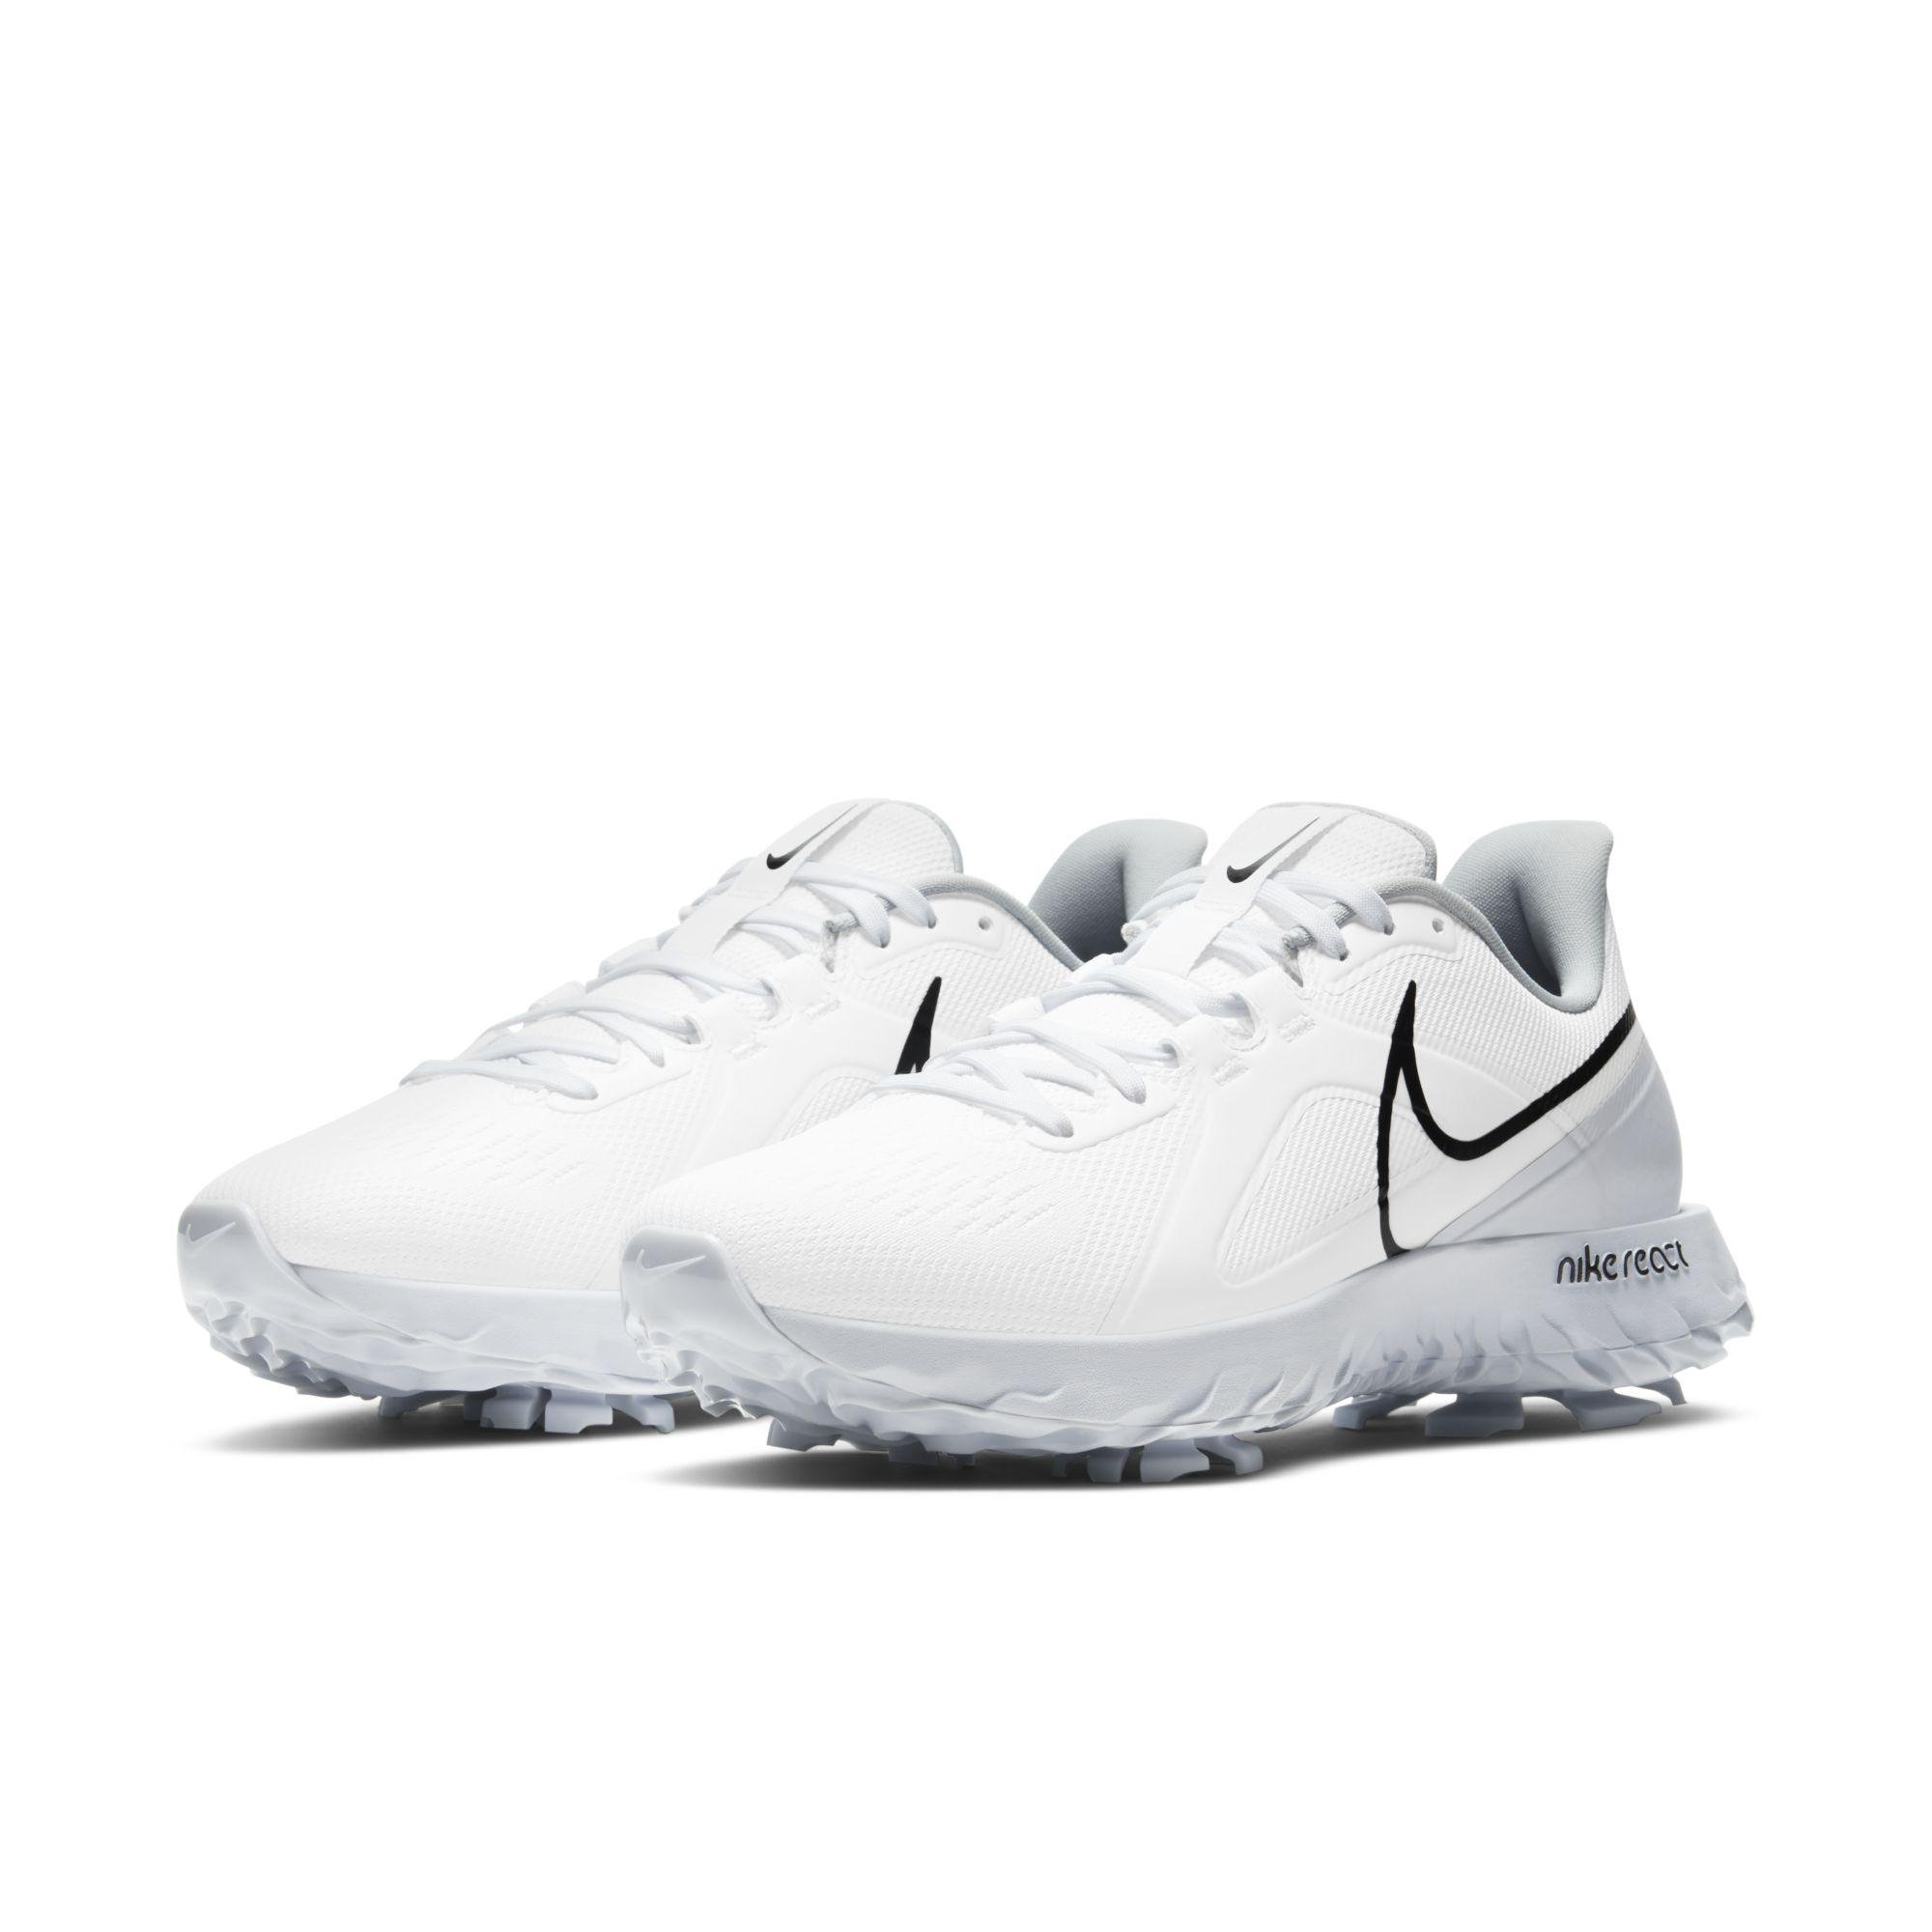 Nike React Infinity Pro Golf Shoe White - Lyst